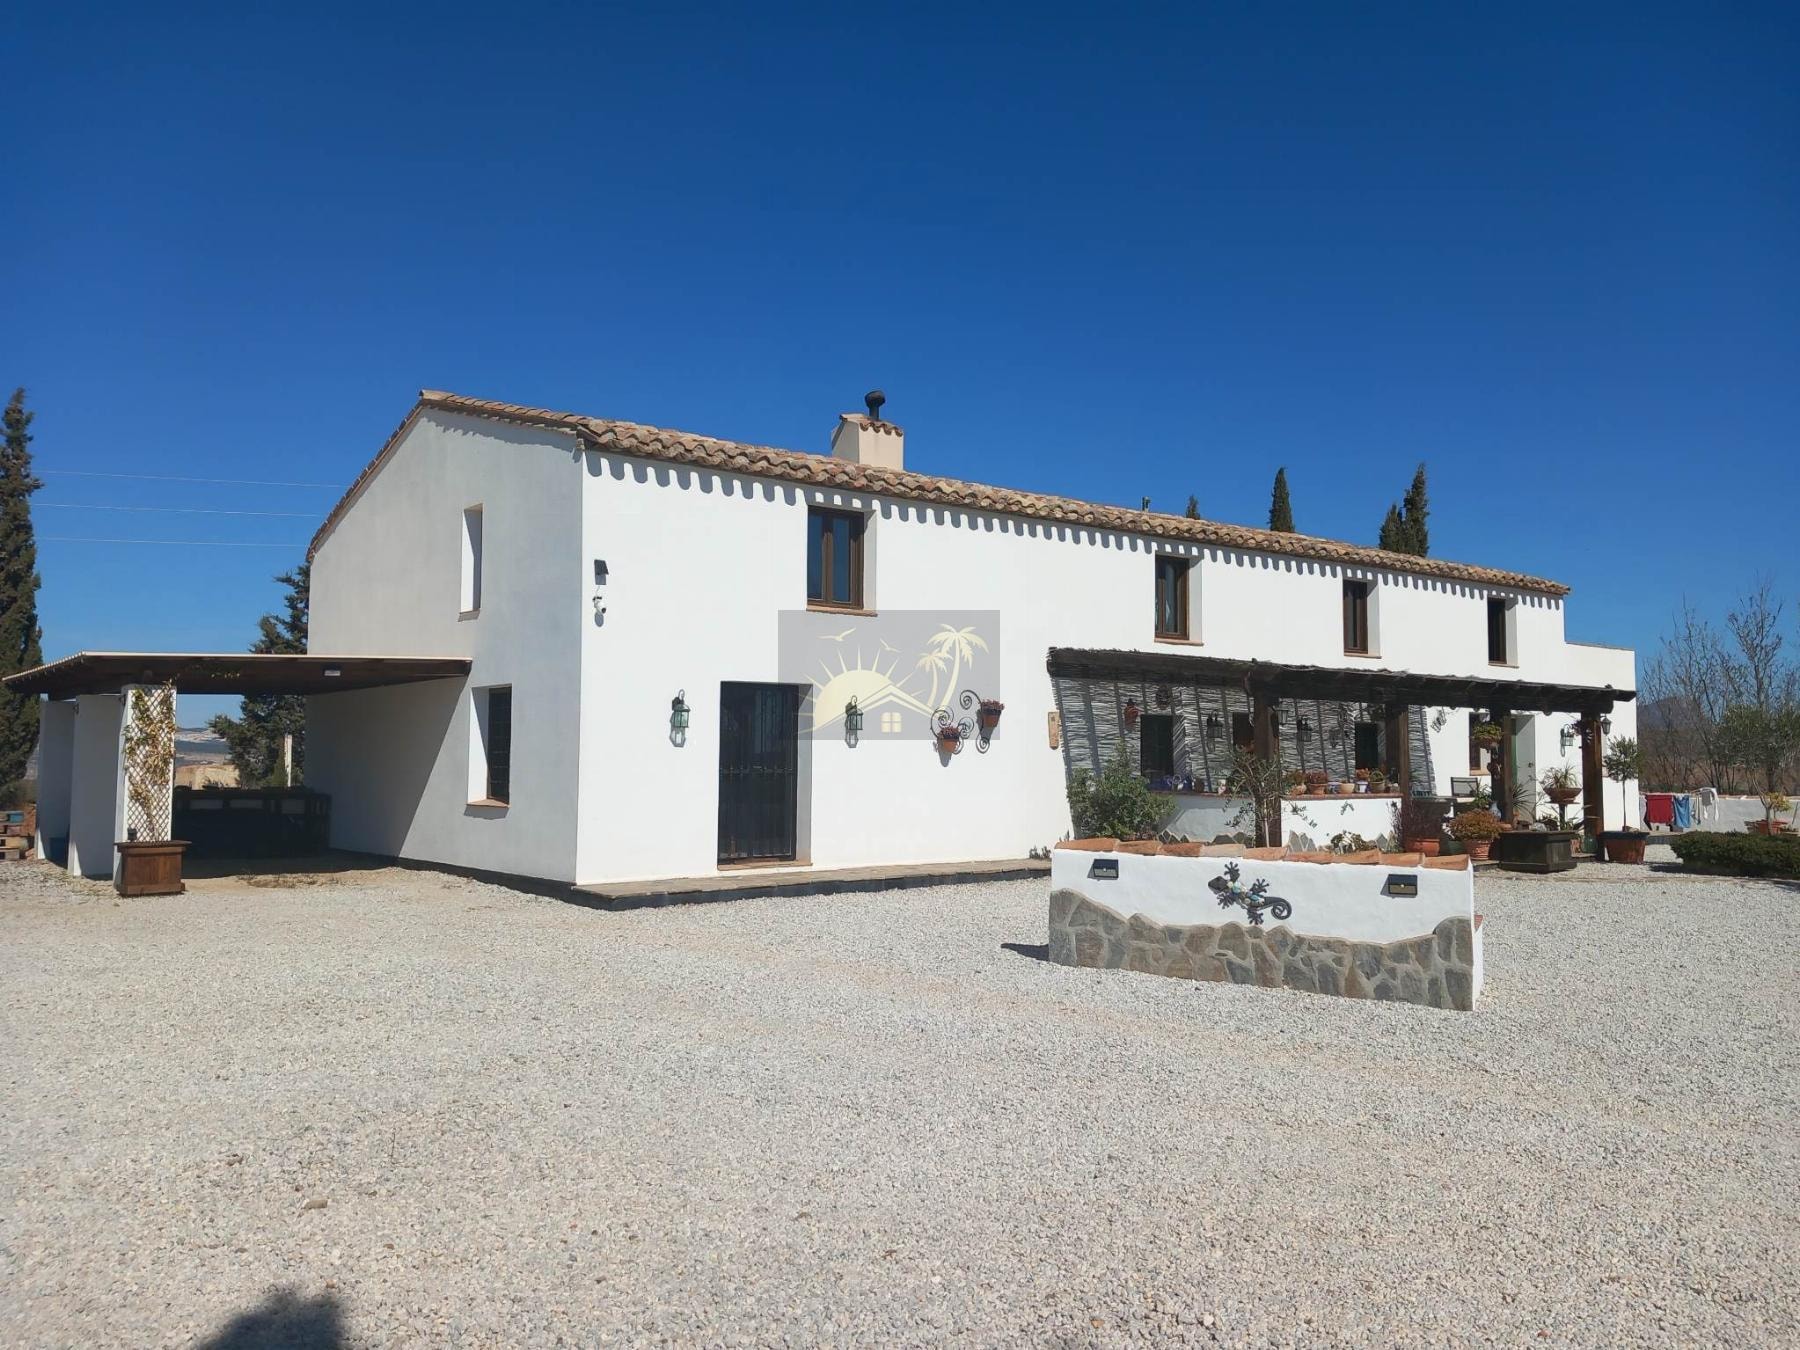 For sale a farmhouse, country house in Agrario, Velez Rubio, Almeria